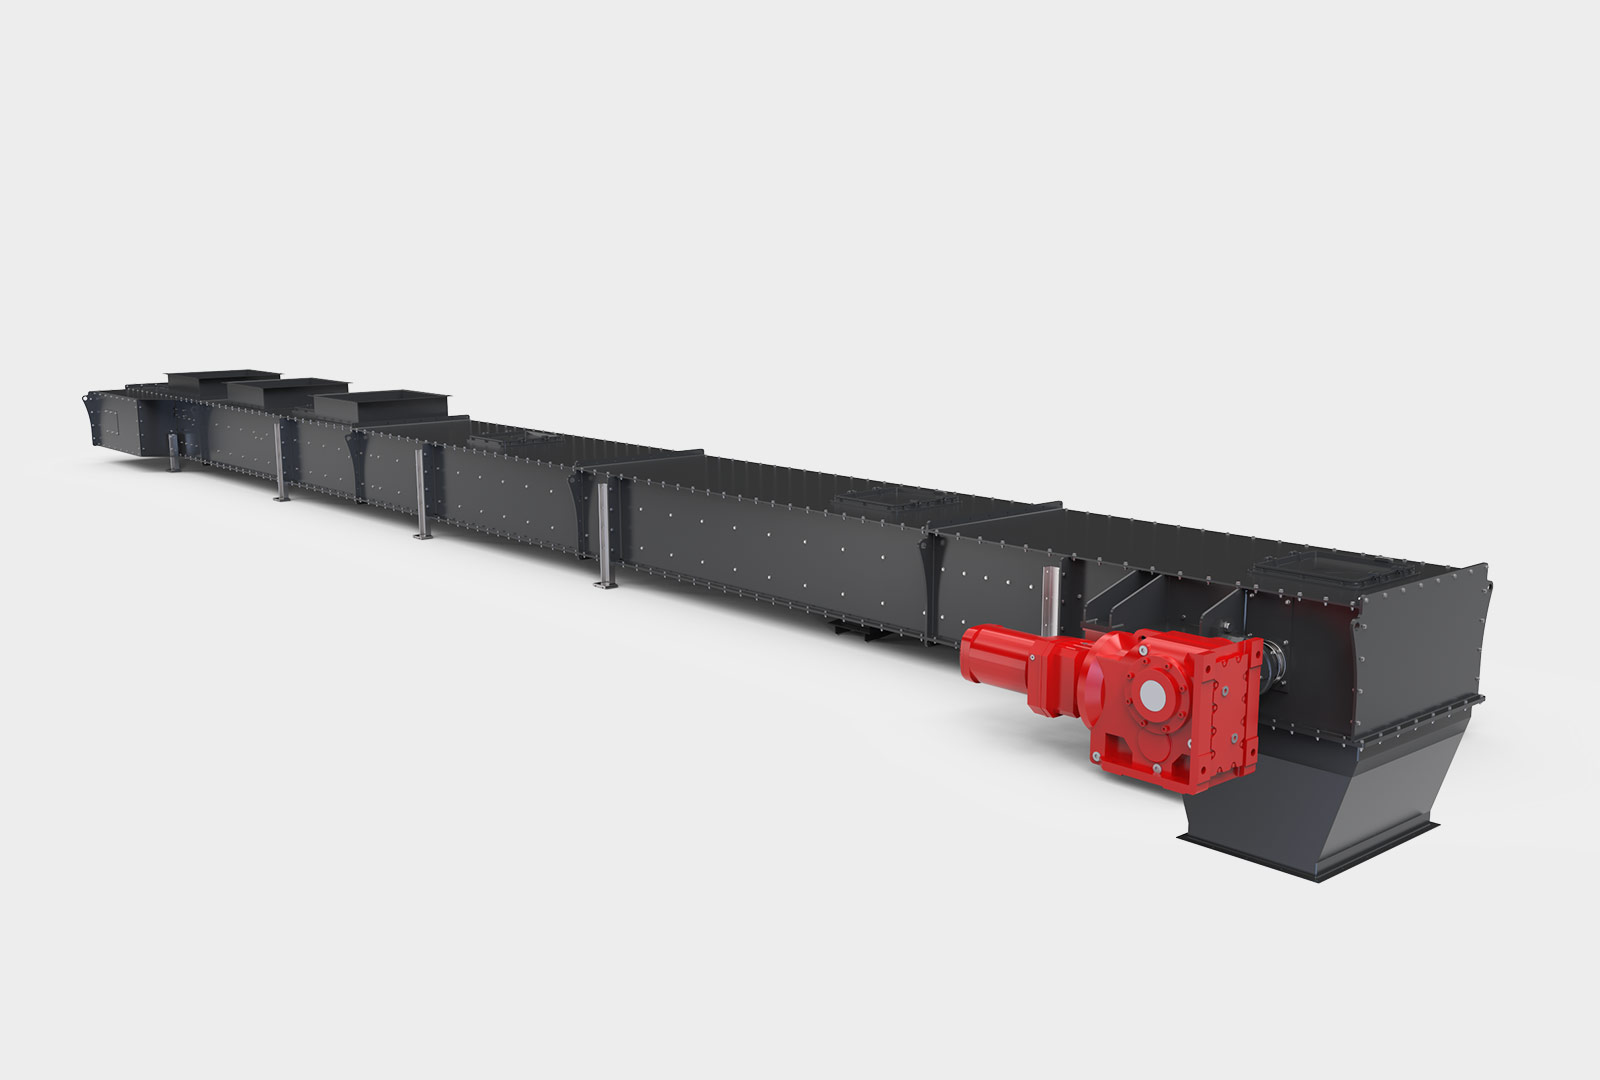 IEM - Chain Belt Conveyor